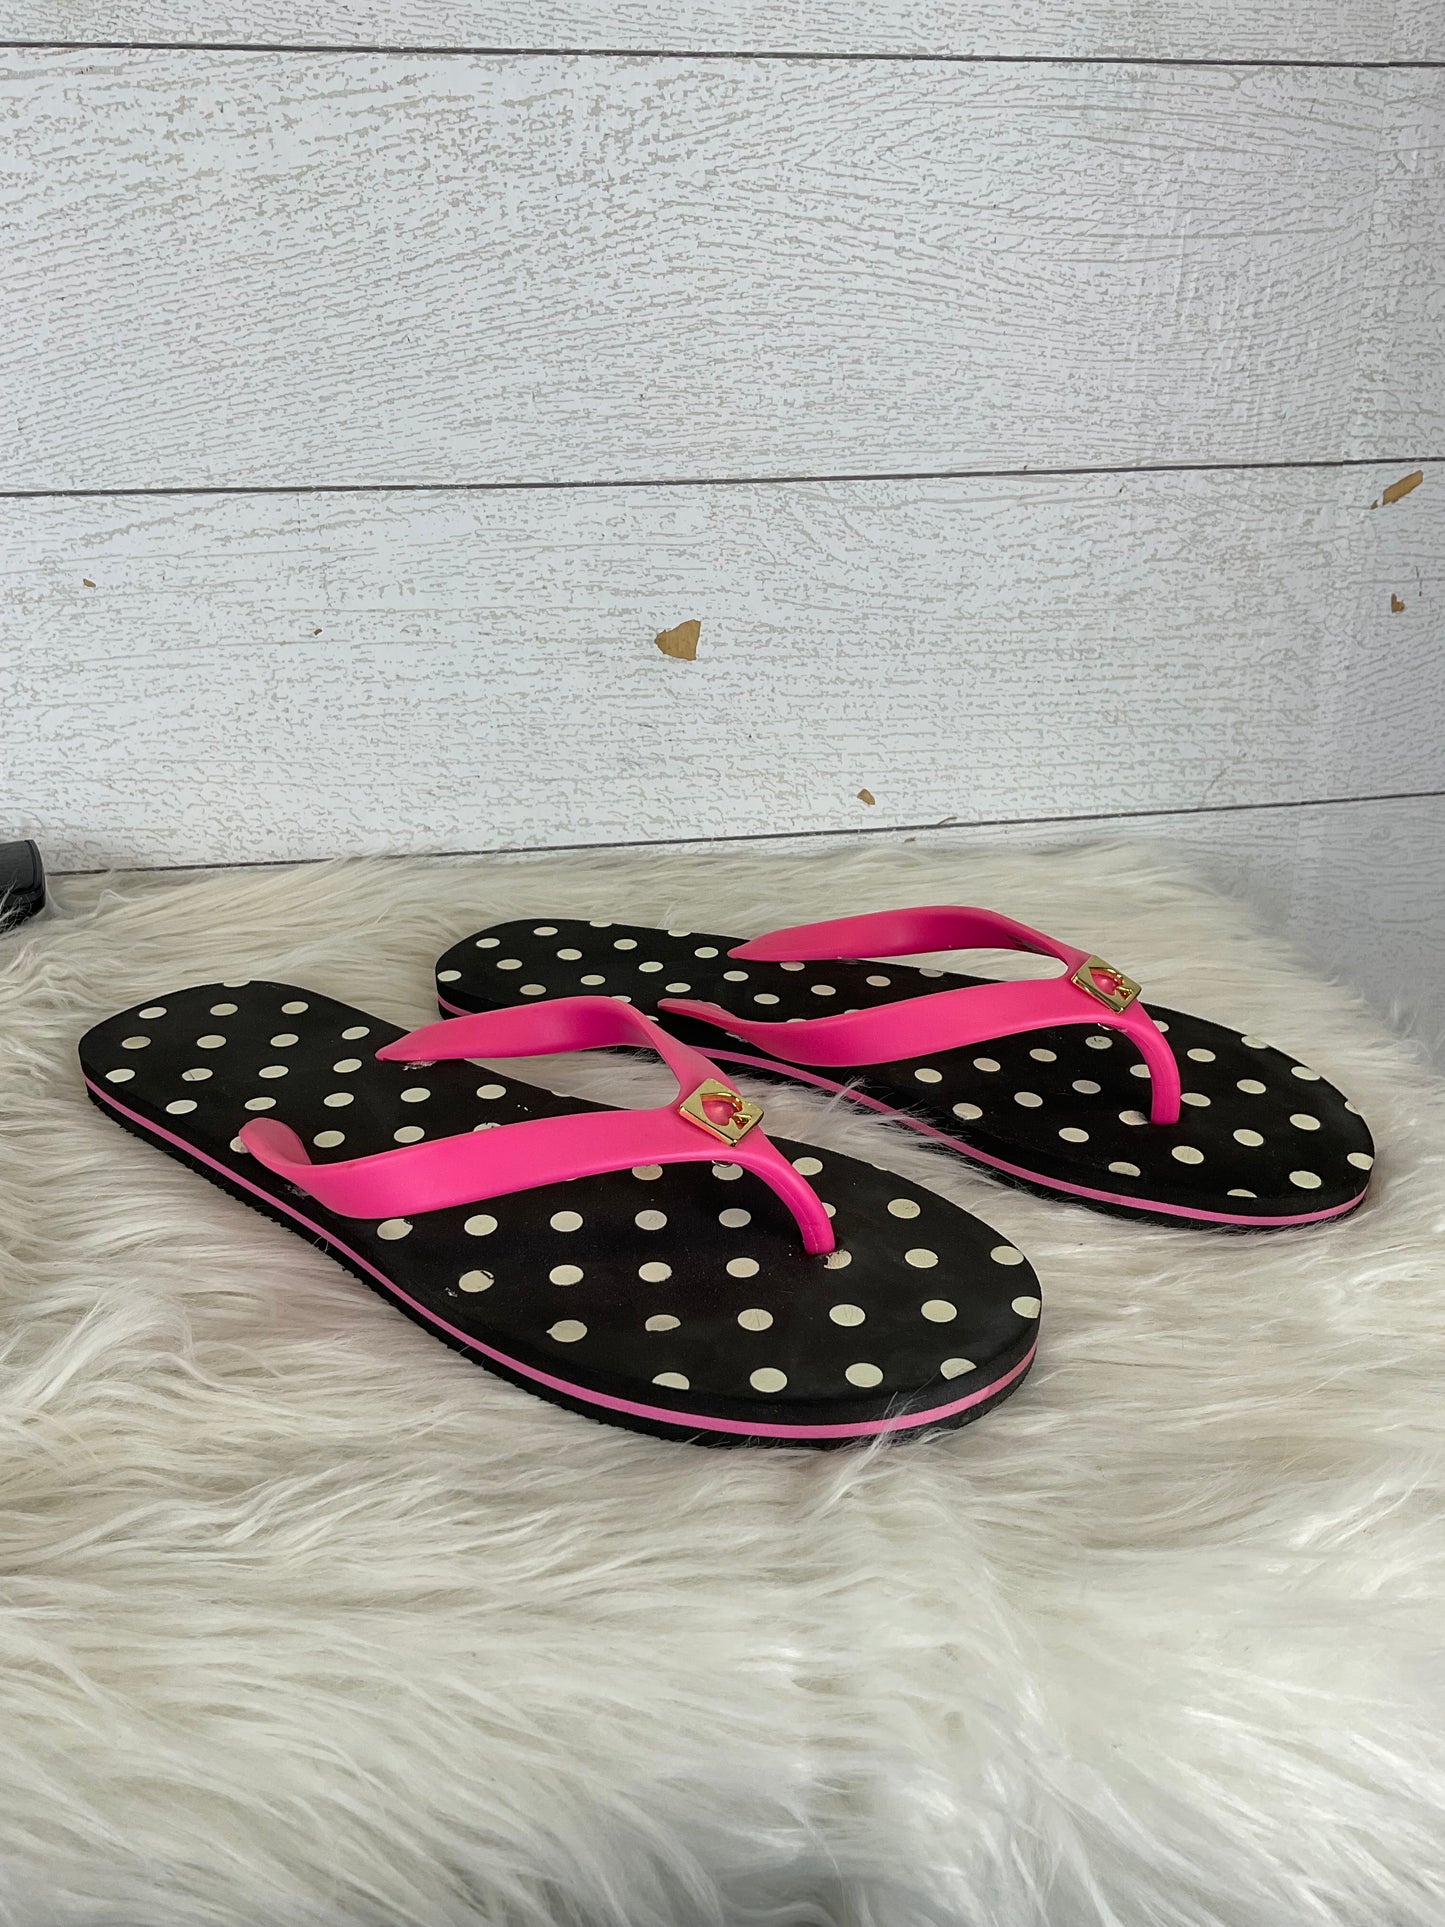 Sandals Flip Flops By Kate Spade  Size: 10